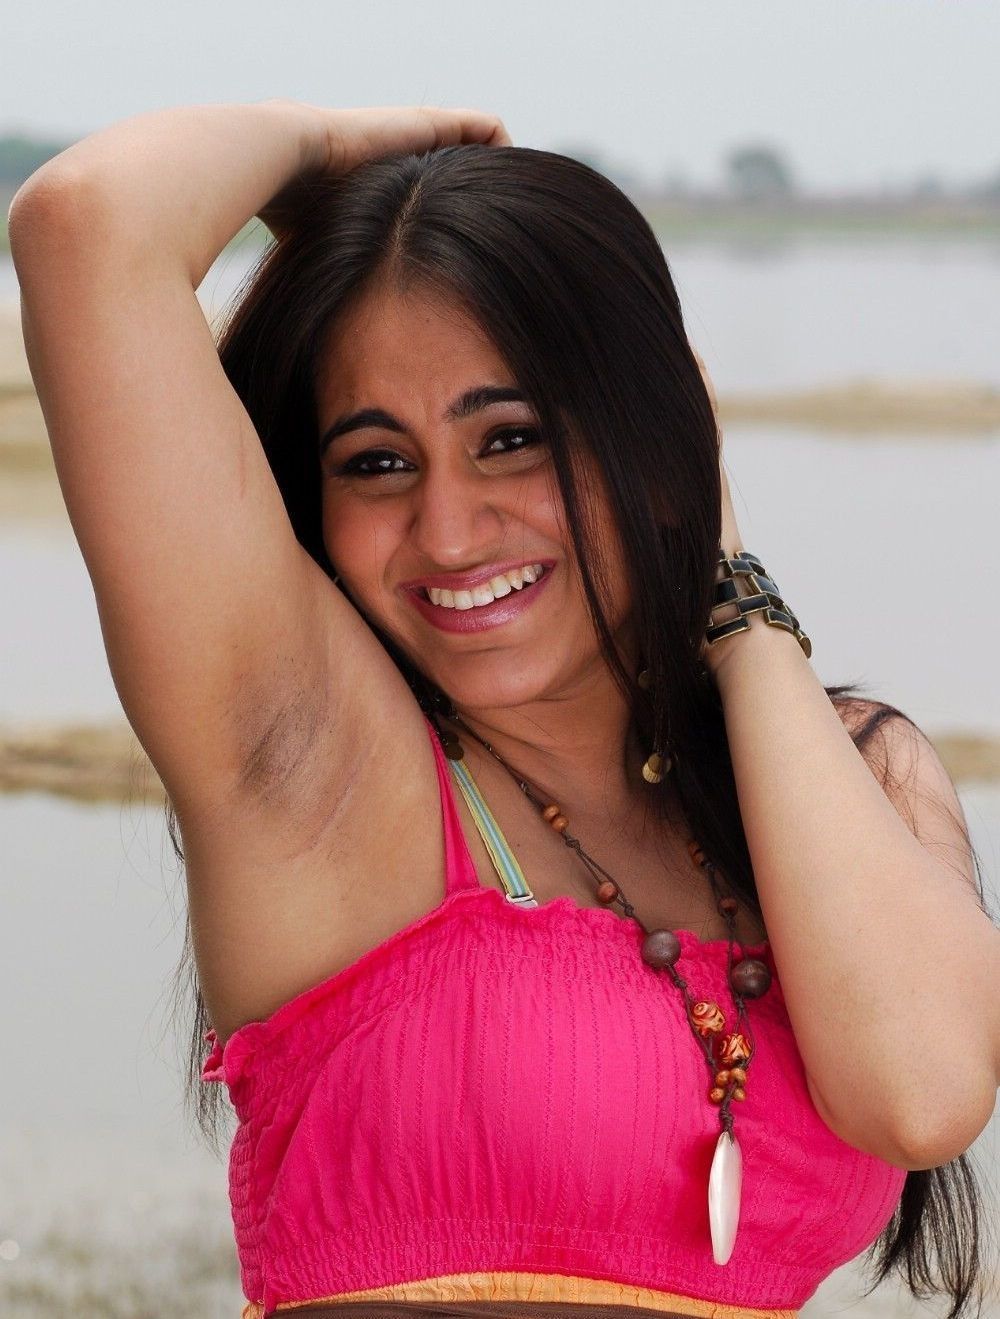 Black fat girl armpit hair imagefap